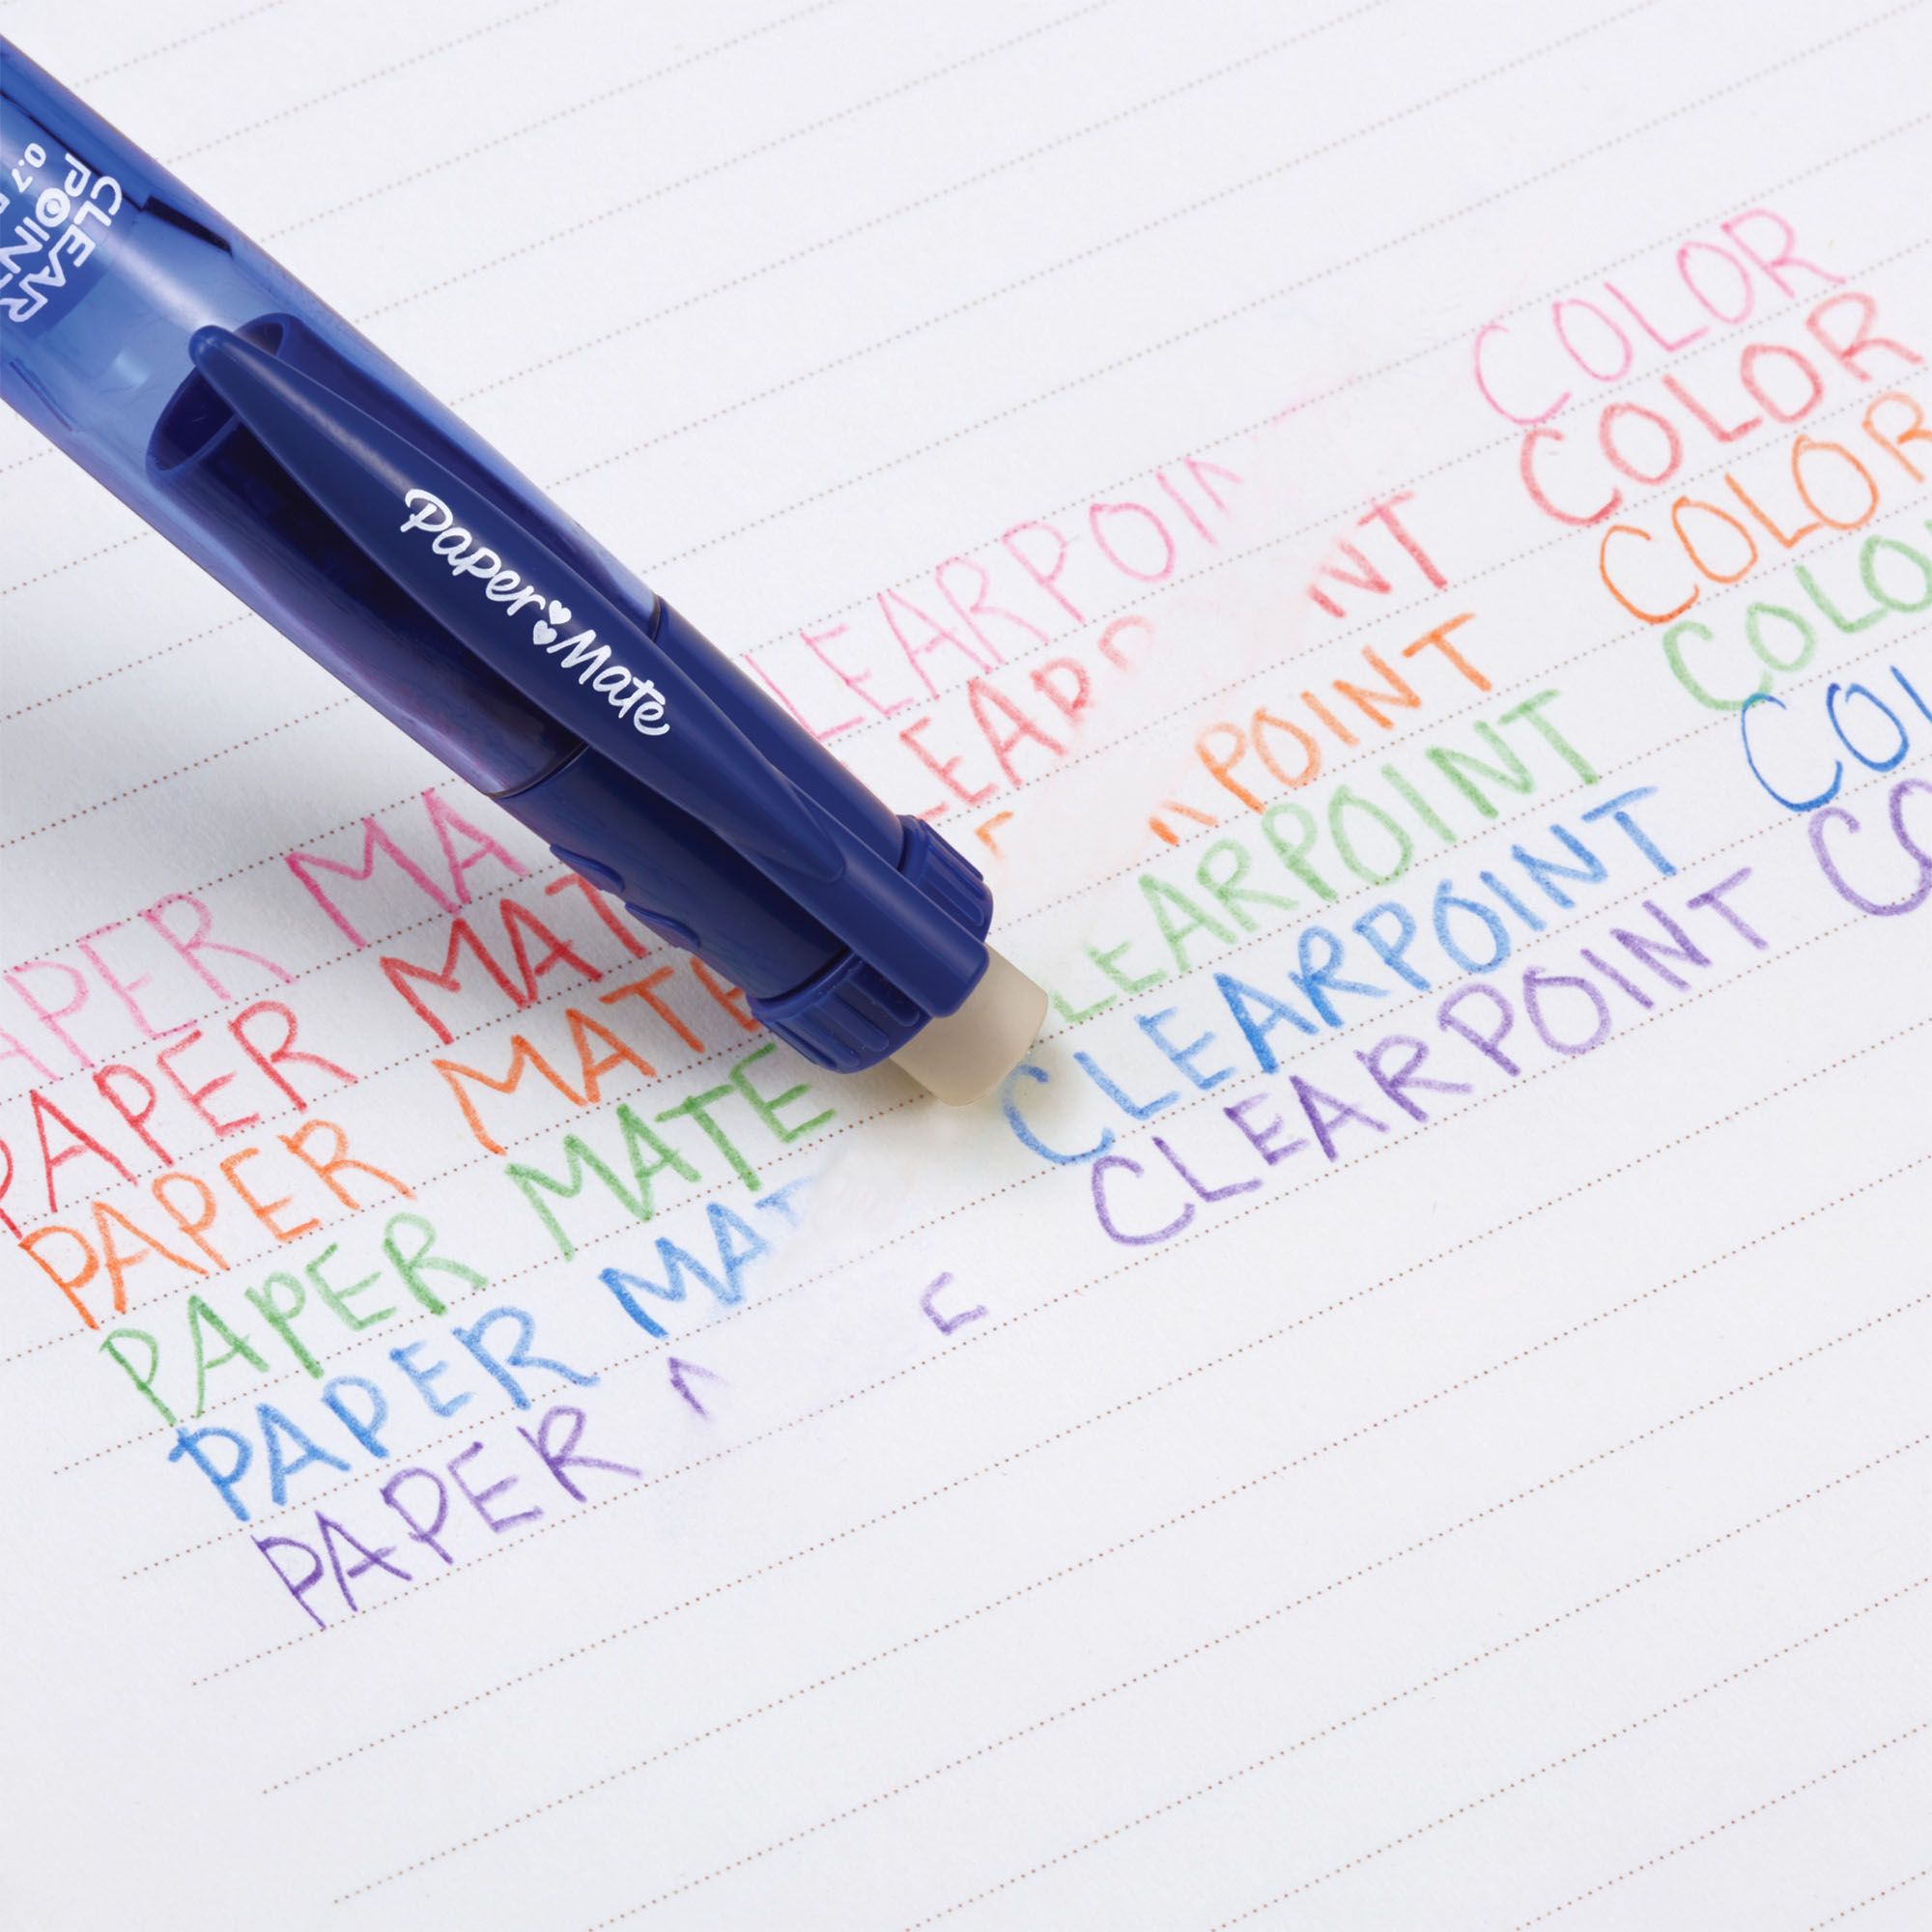 Sharpie S Gel Pens, 14 ct. - 12 Black and 2 Blue